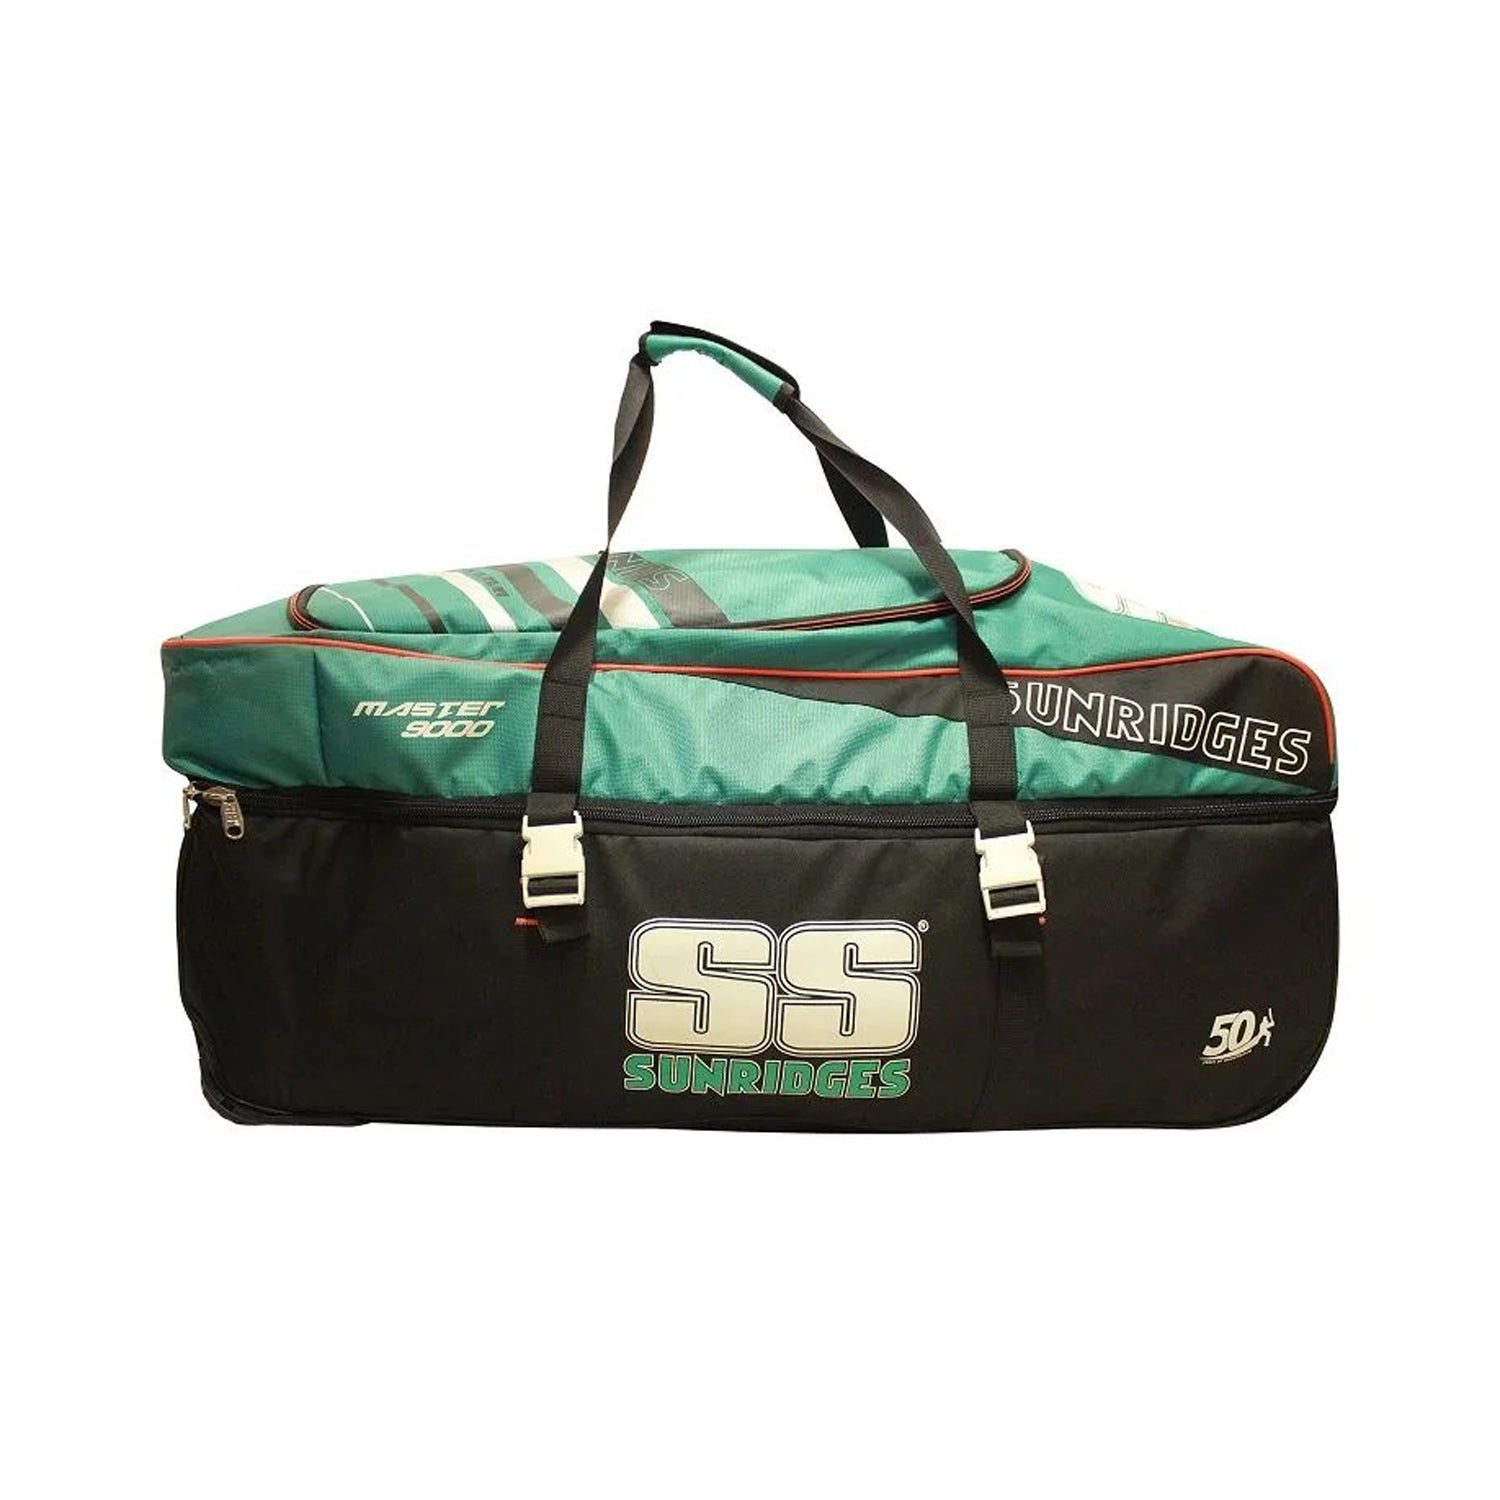 SS Master 9000 Wheels Cricket Kit Bag - Best Price online Prokicksports.com